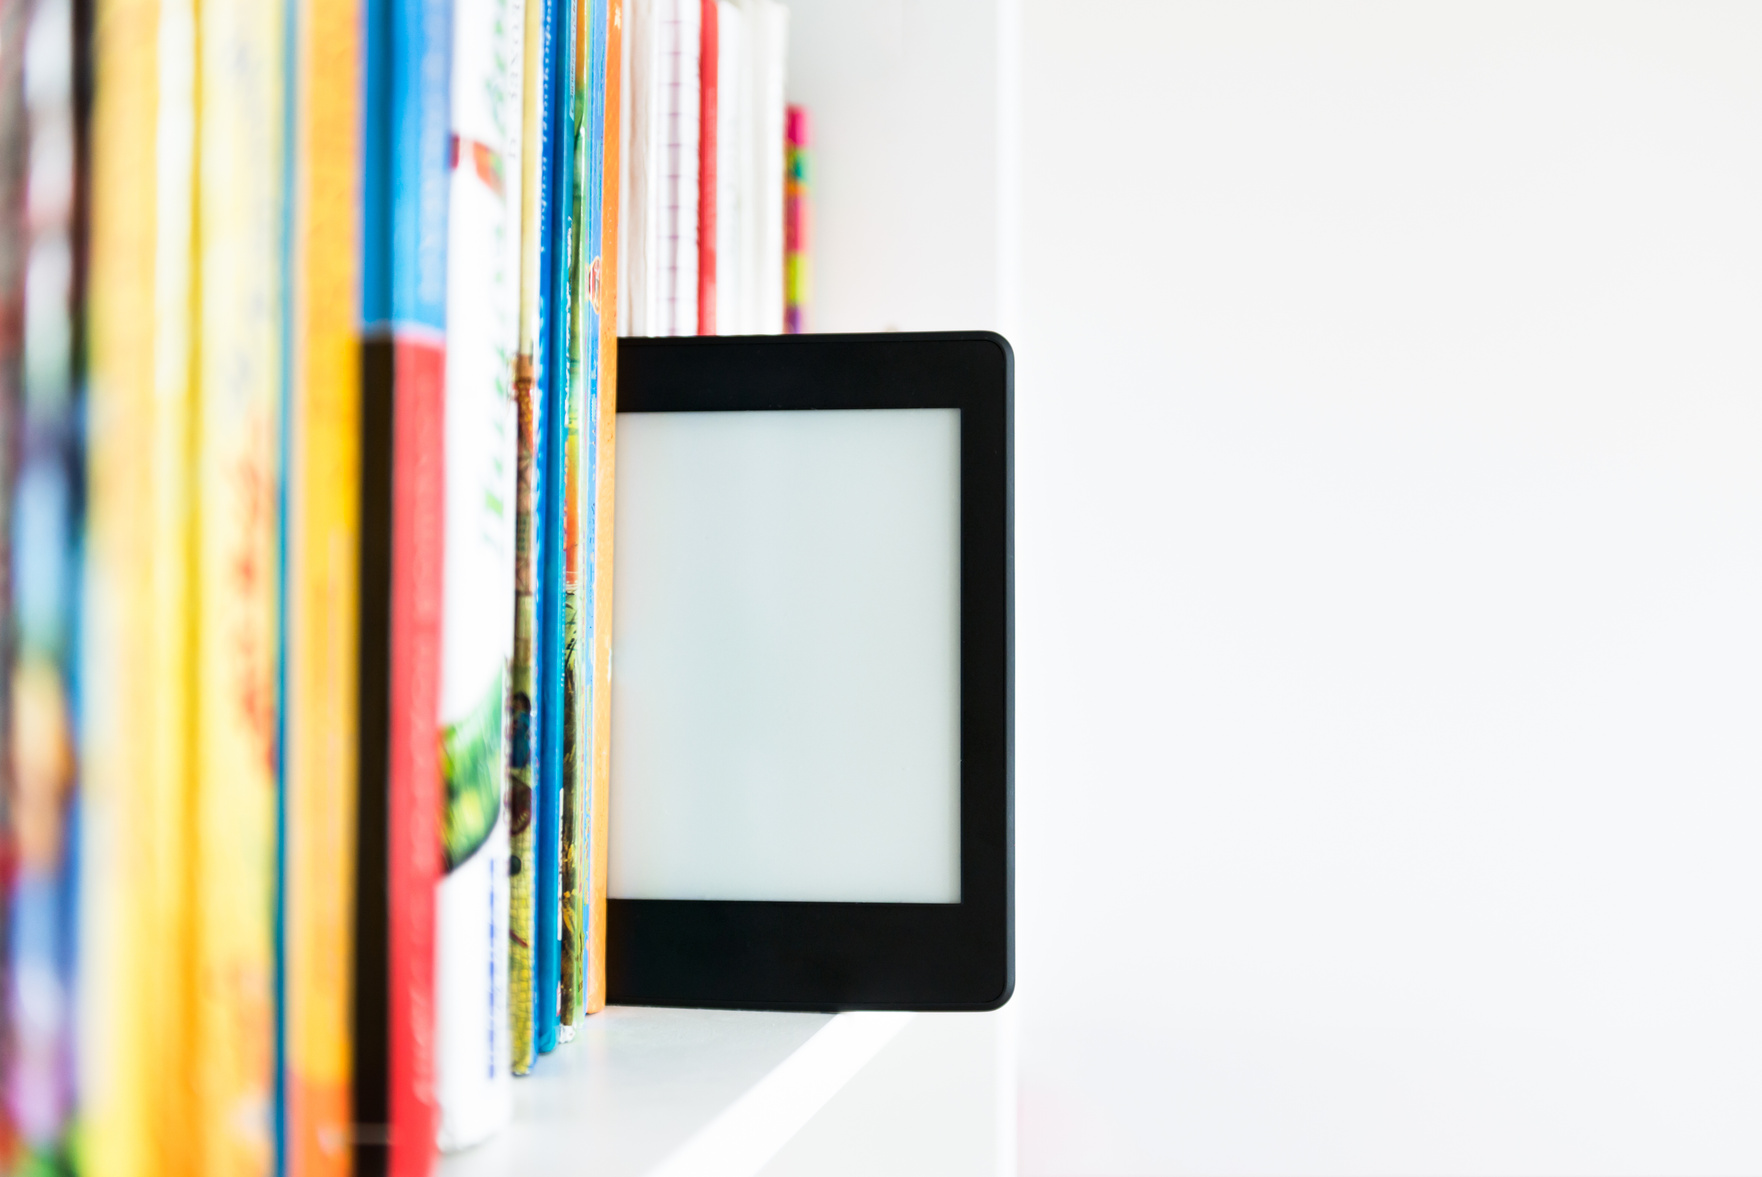 Ebook or Digital Reading Tablet Device